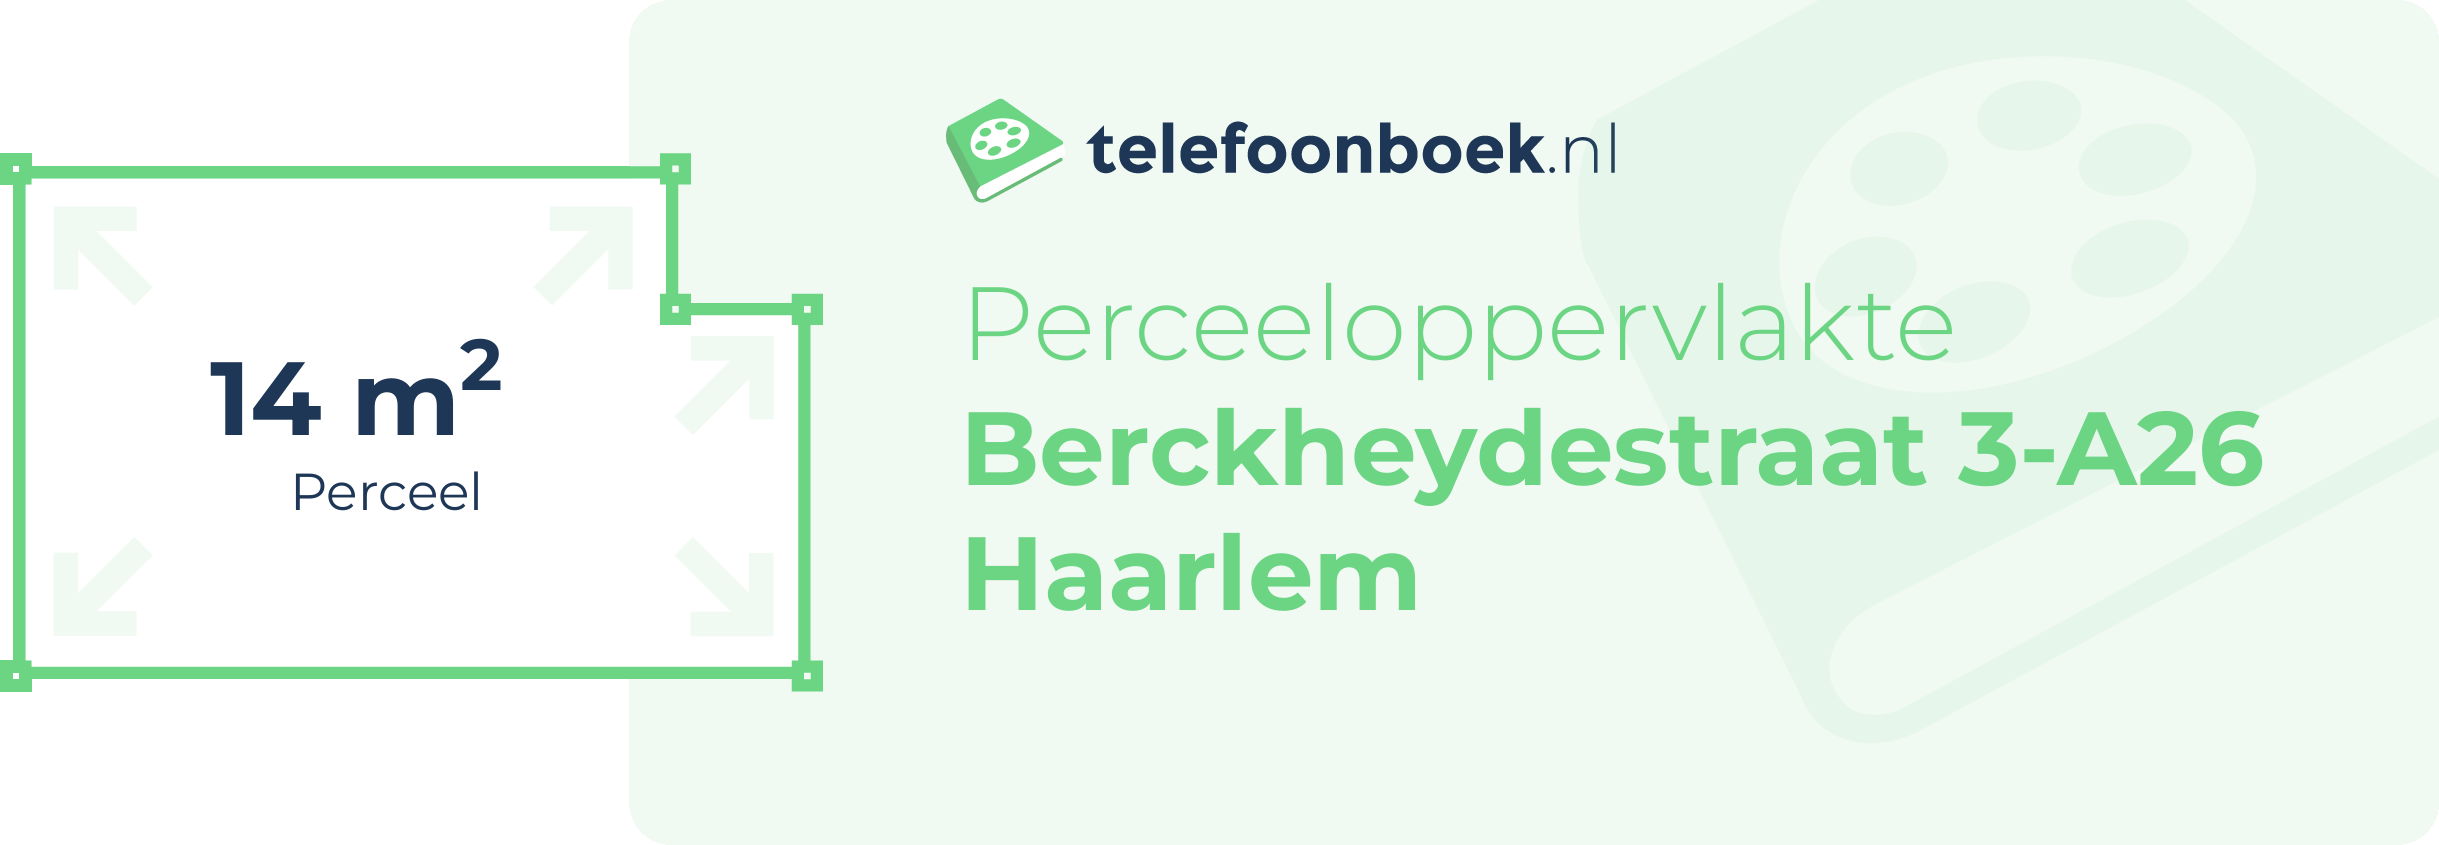 Perceeloppervlakte Berckheydestraat 3-A26 Haarlem